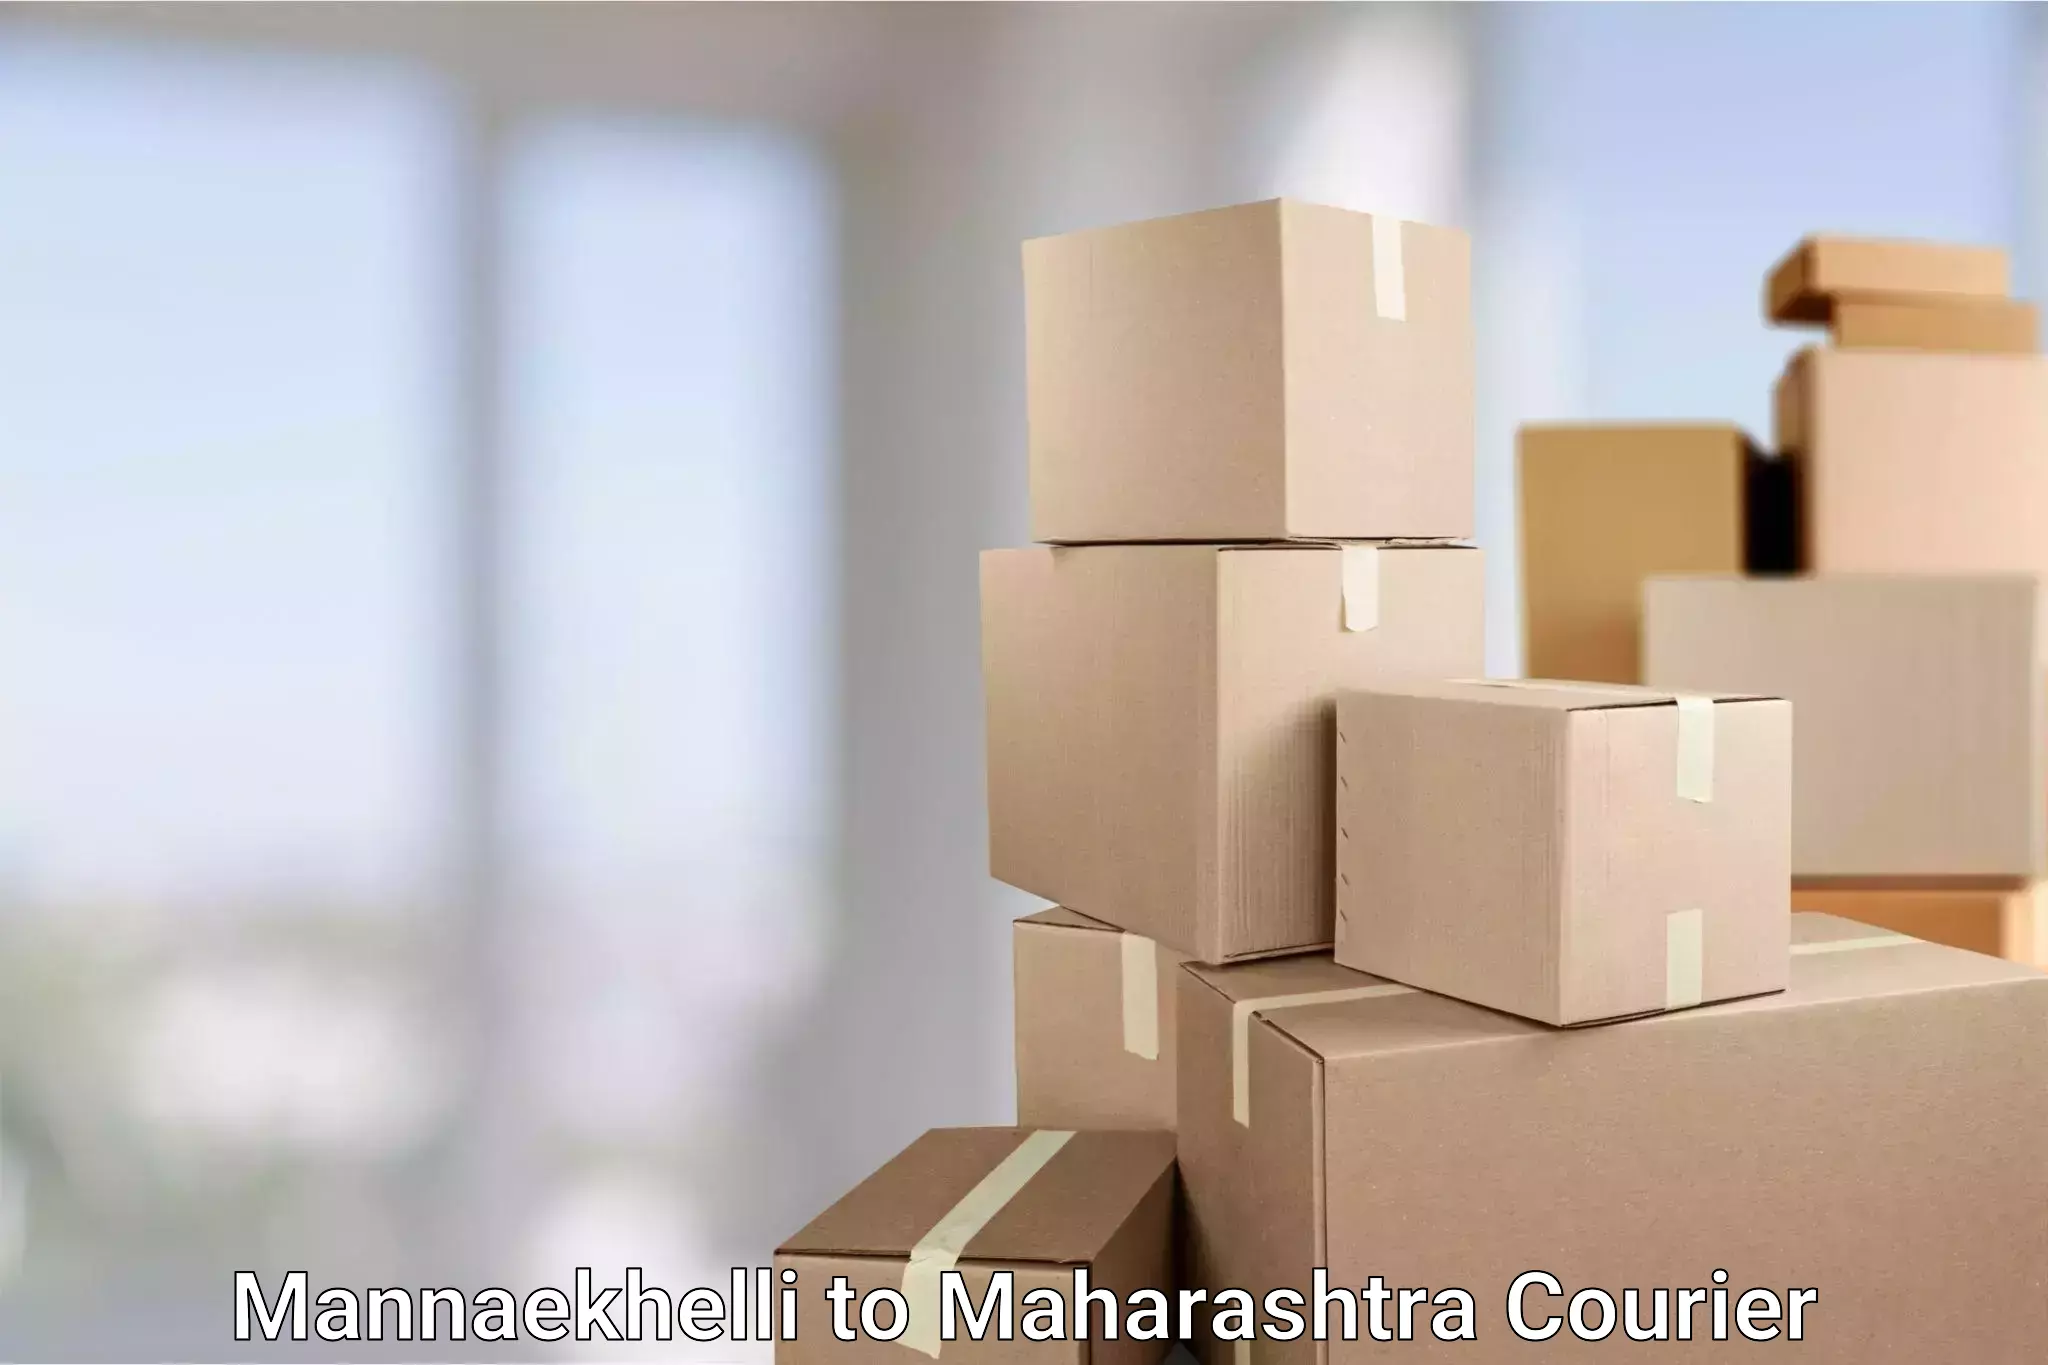 Global shipping networks Mannaekhelli to Maharashtra